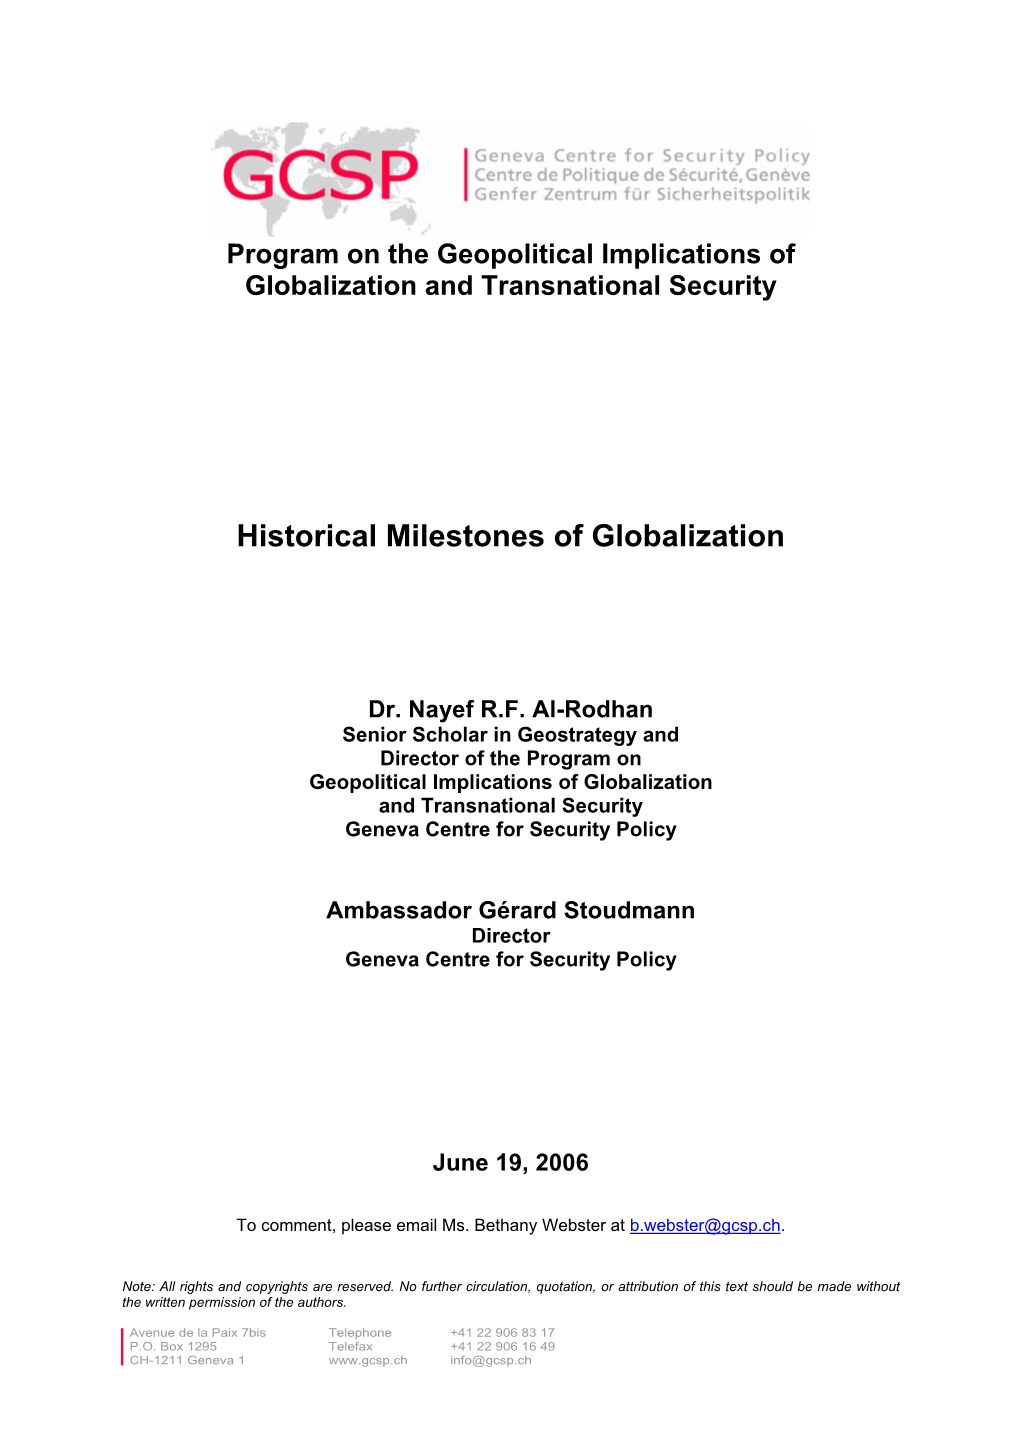 Historical Milestones of Globalization